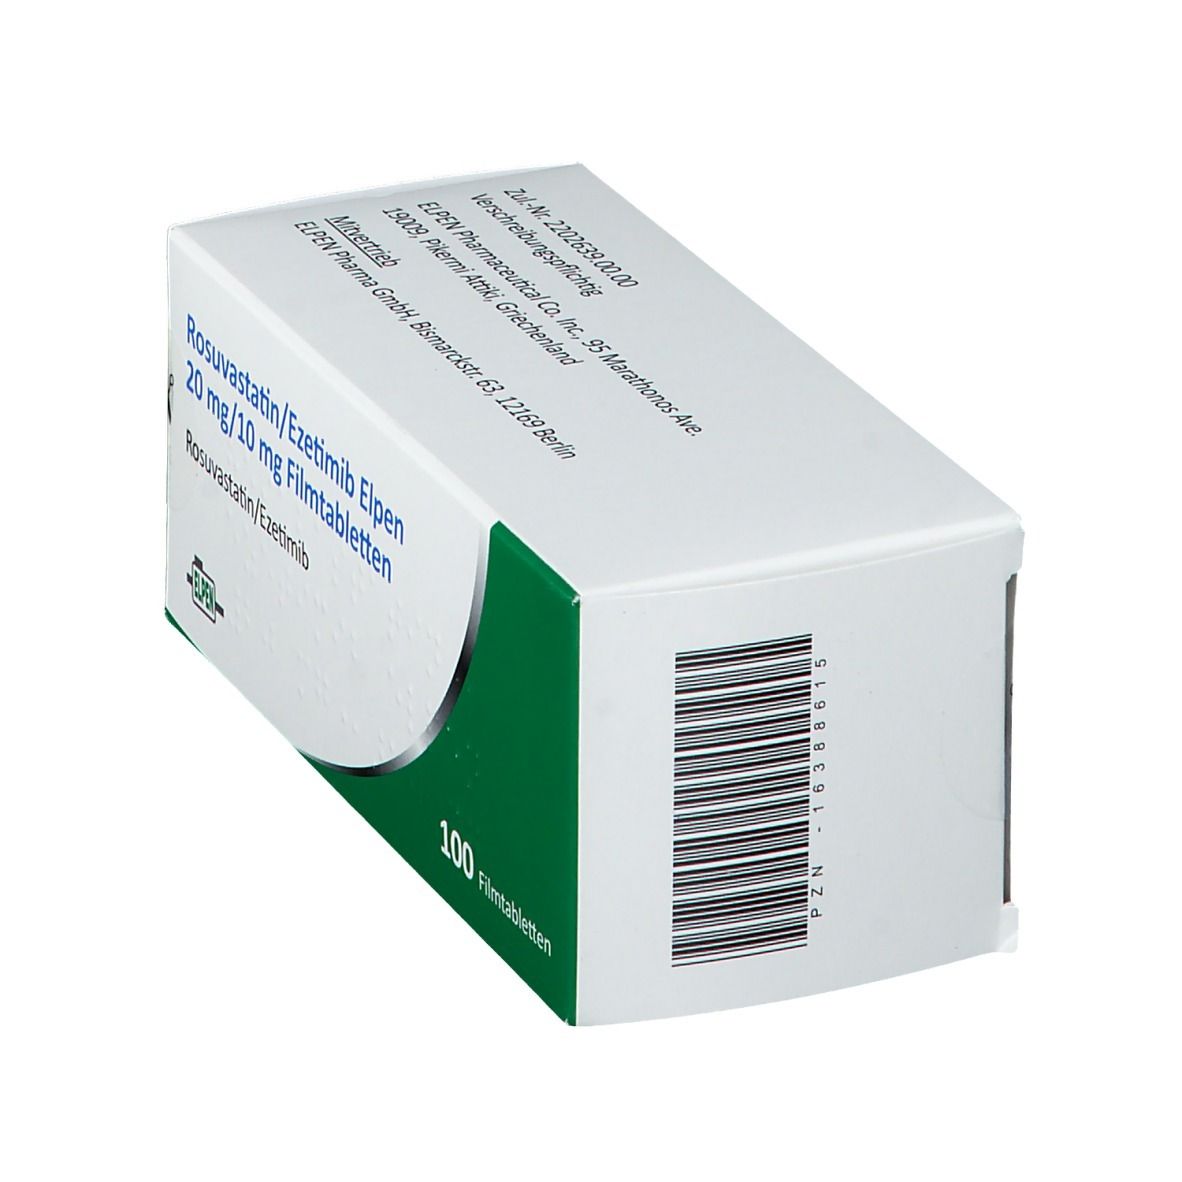 Rosuvastatin/Ezetimib Elpen 20 mg/10 mg